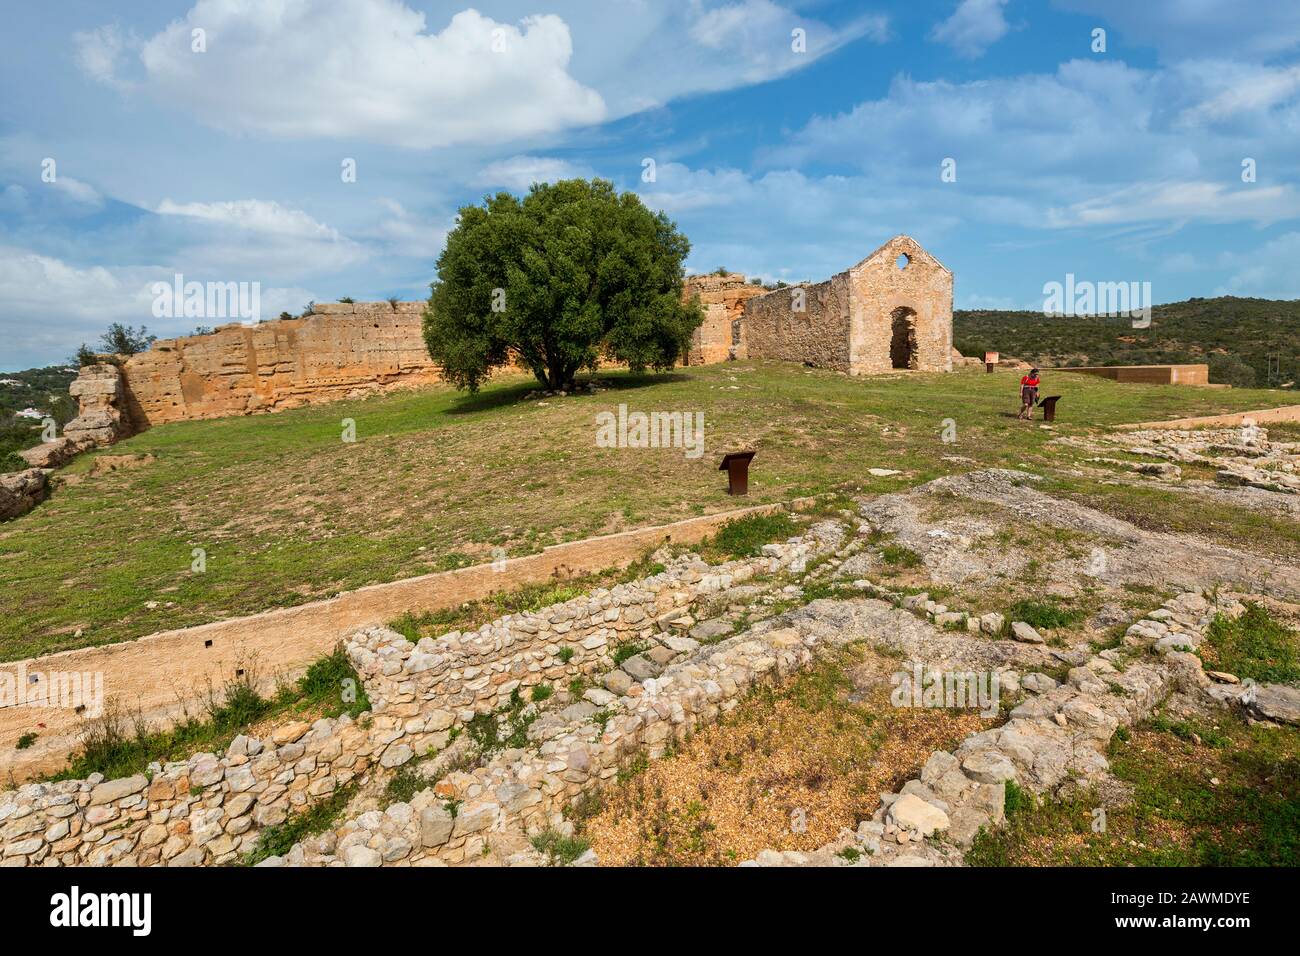 Remains of walls in Paderne Moorish castle, Paderne, Algarve, Portugal Stock Photo